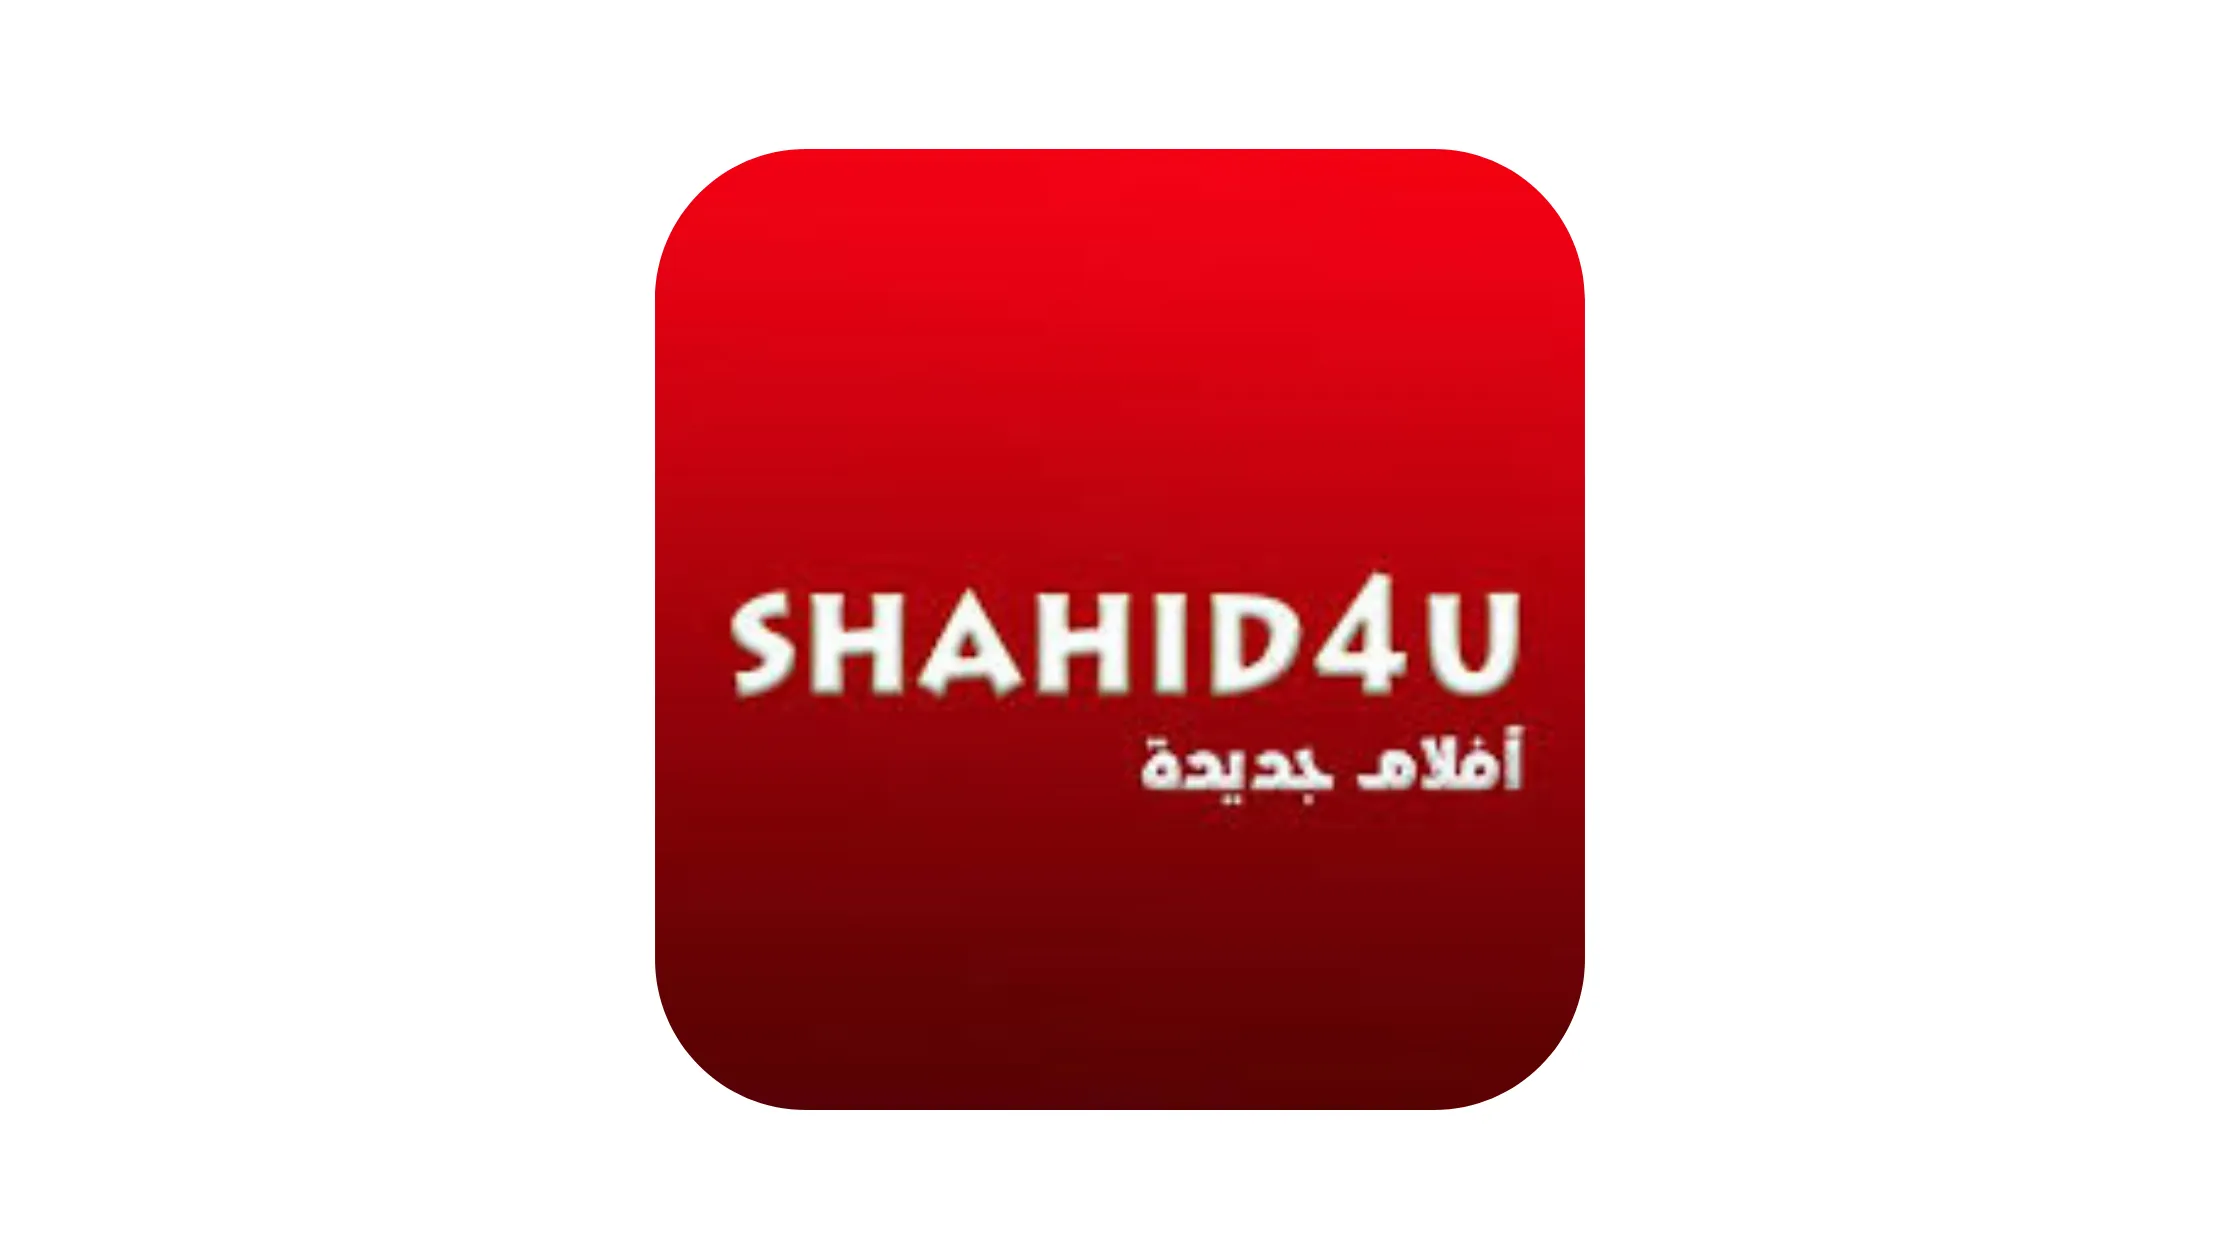 تحميل تطبيق شاهد فوريو Shahed4u APK للاندرويد والايفون اخر اصدار